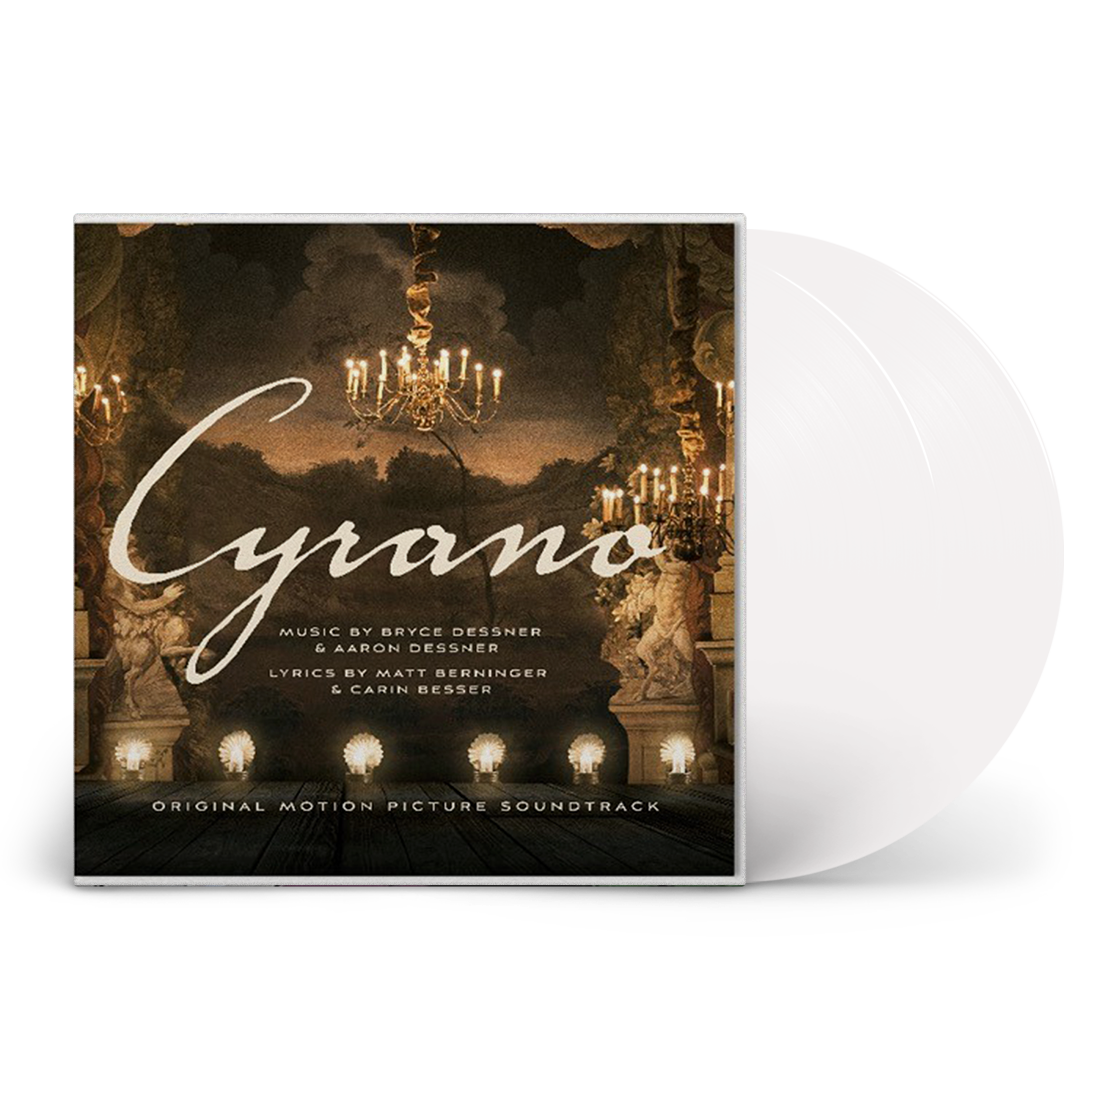 Bryce Dessner, Aaron Dessner, Cast of Cyrano - Cyrano (OST): Limited White Vinyl 2LP